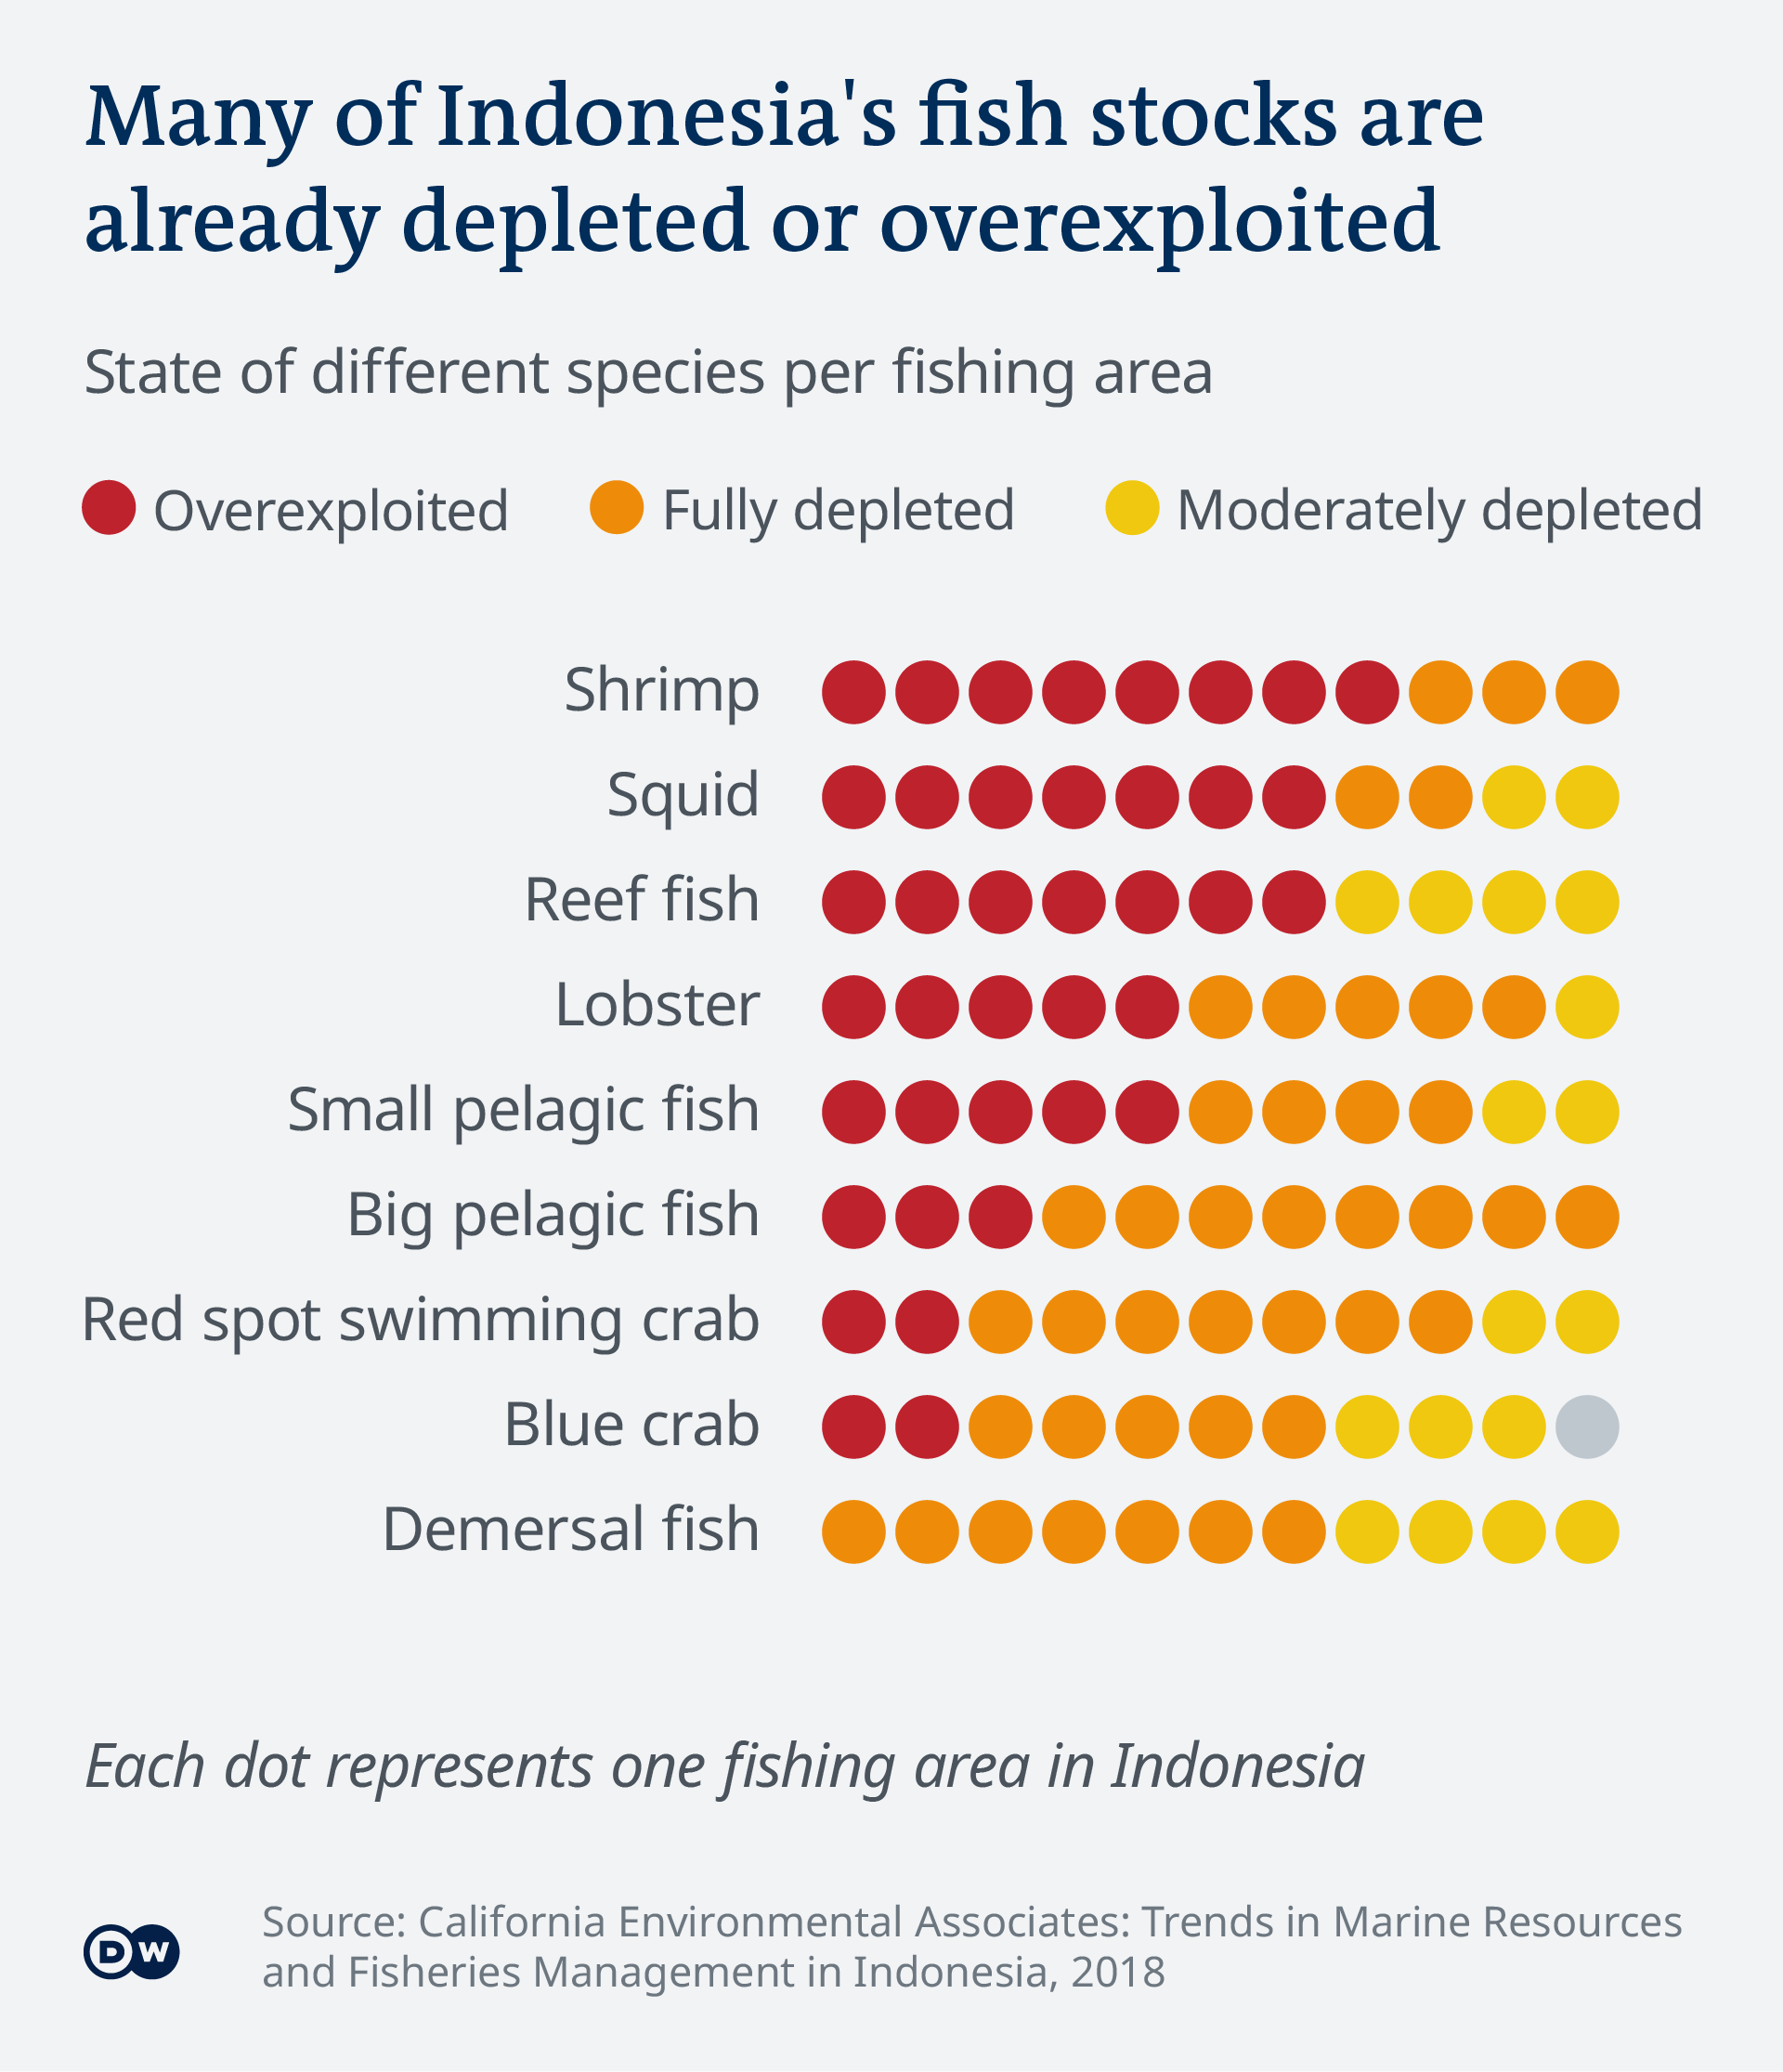 Data visualization: Species status in fishing areas 